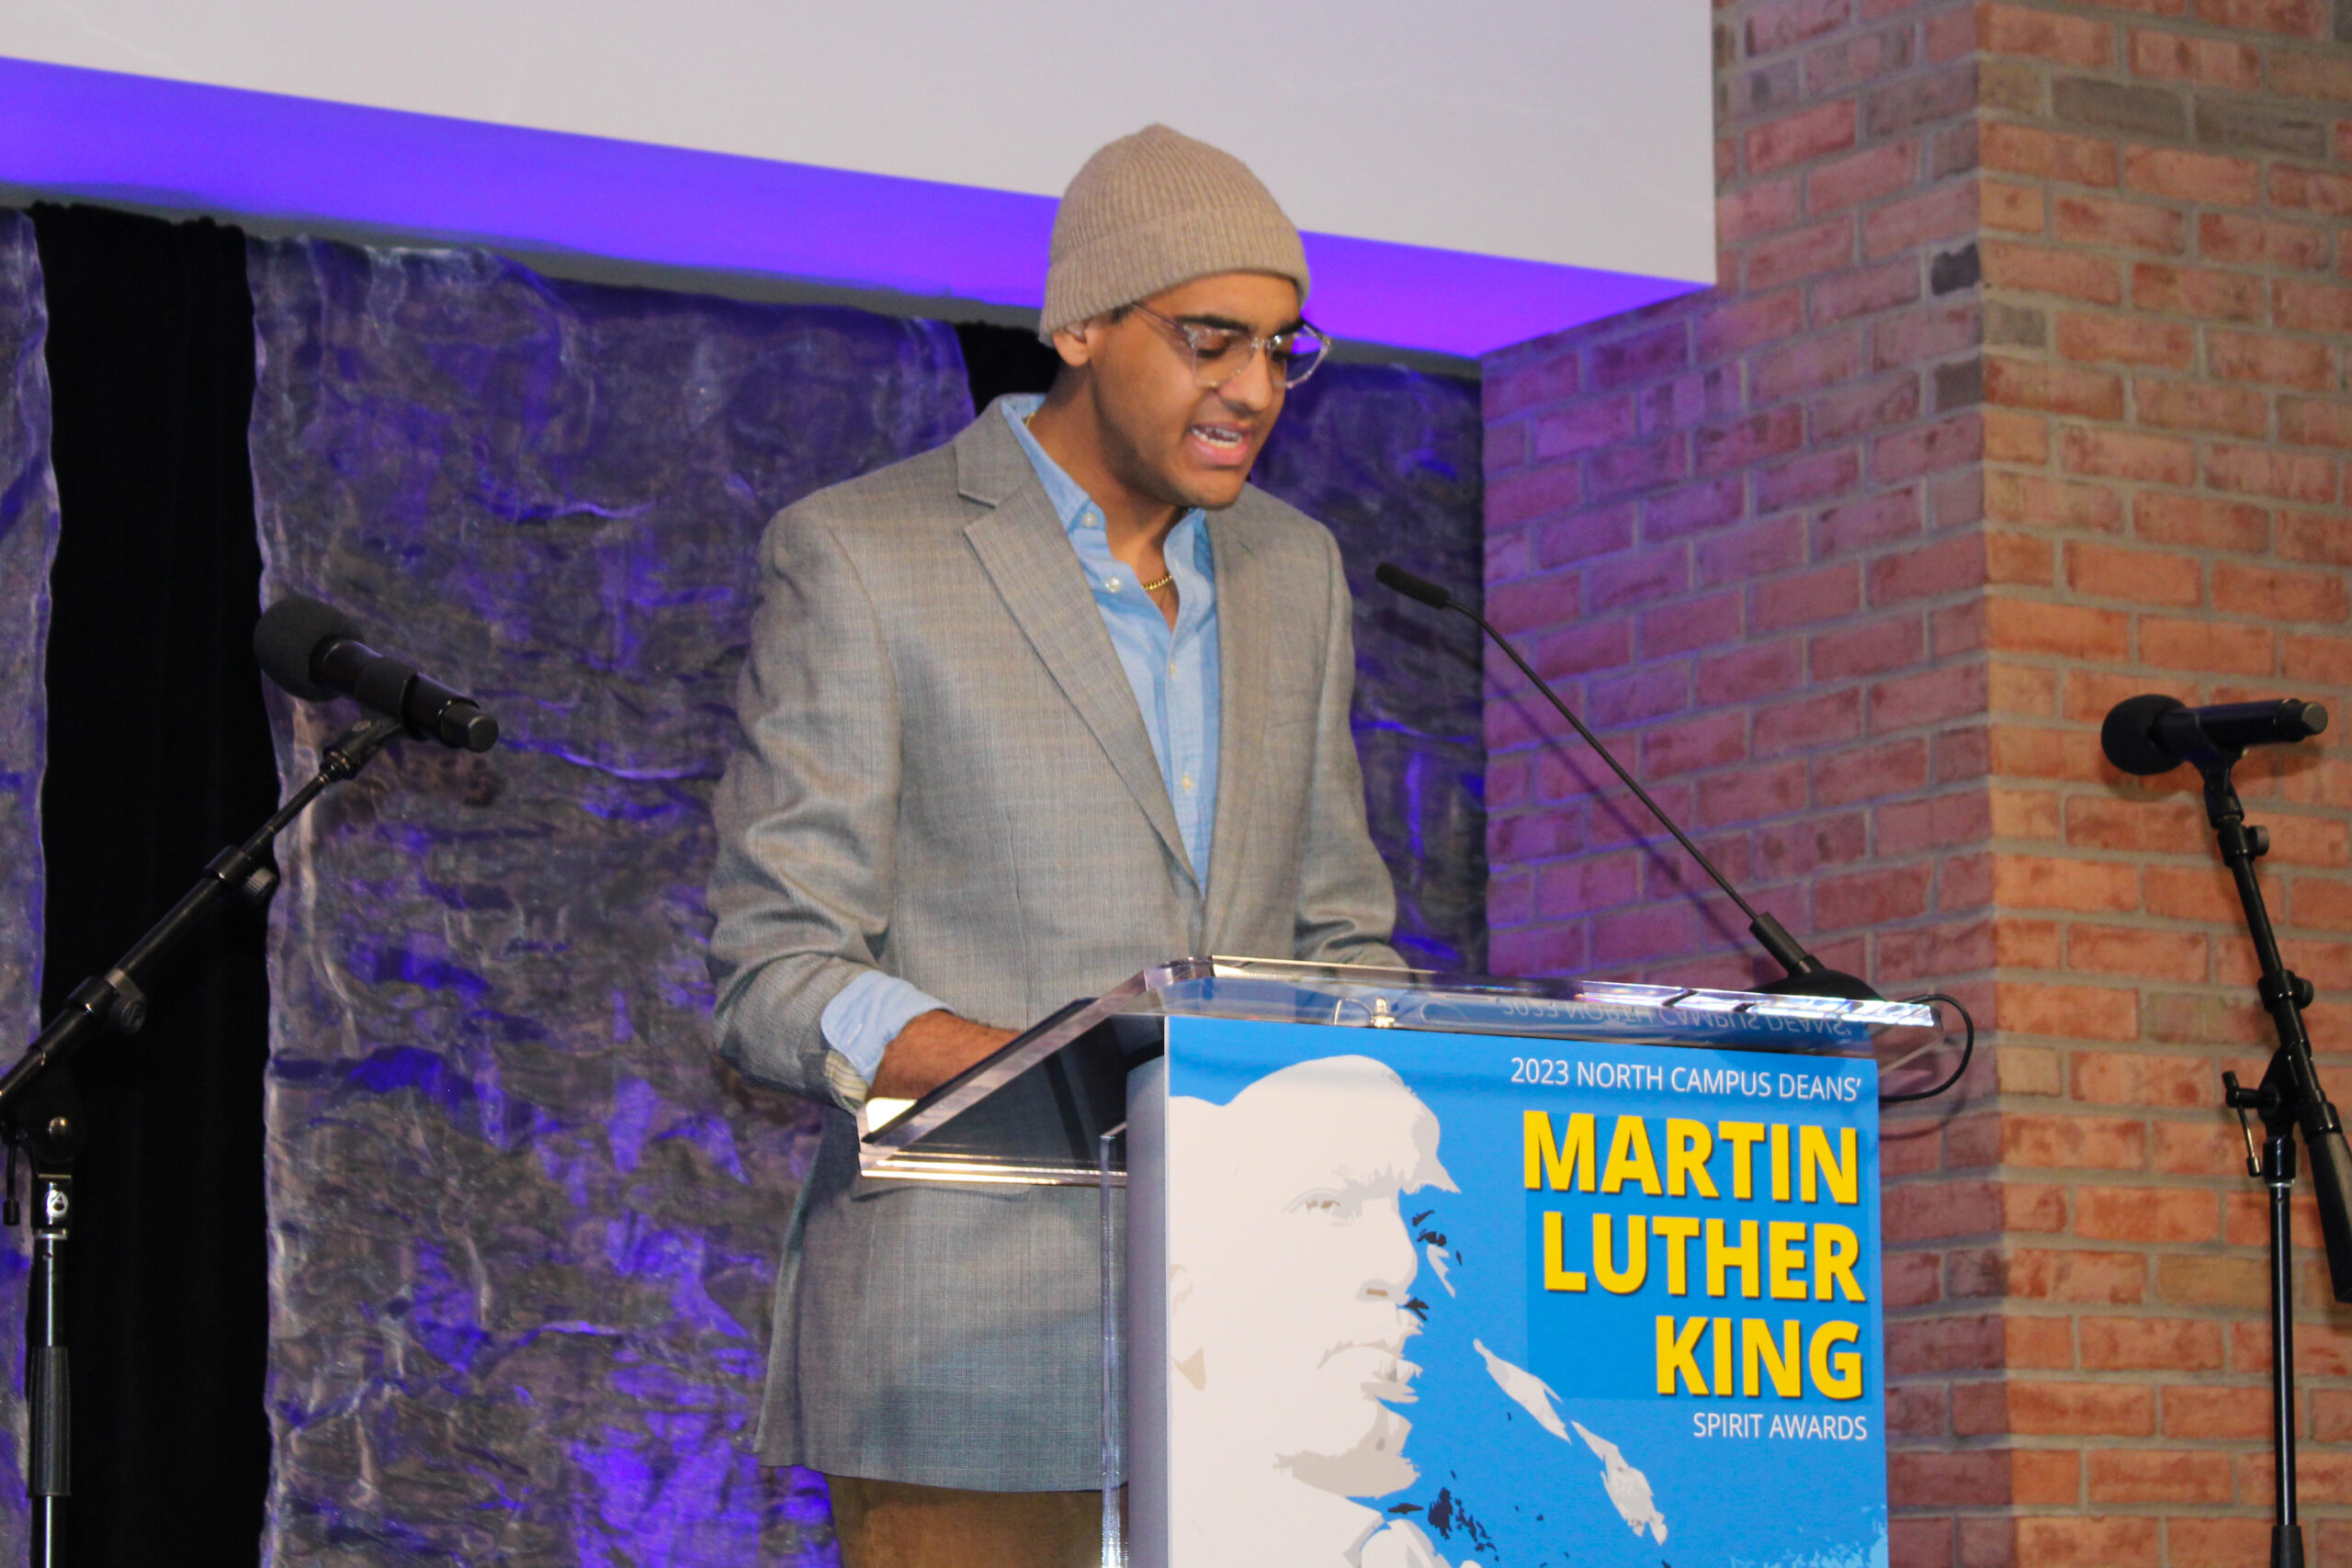 2023 NC Deans' MLK Spirit Awards —Sevon Askew, Excerpt from “I Have A Dream,” Reverend Dr. Martin Luther King, Jr.
